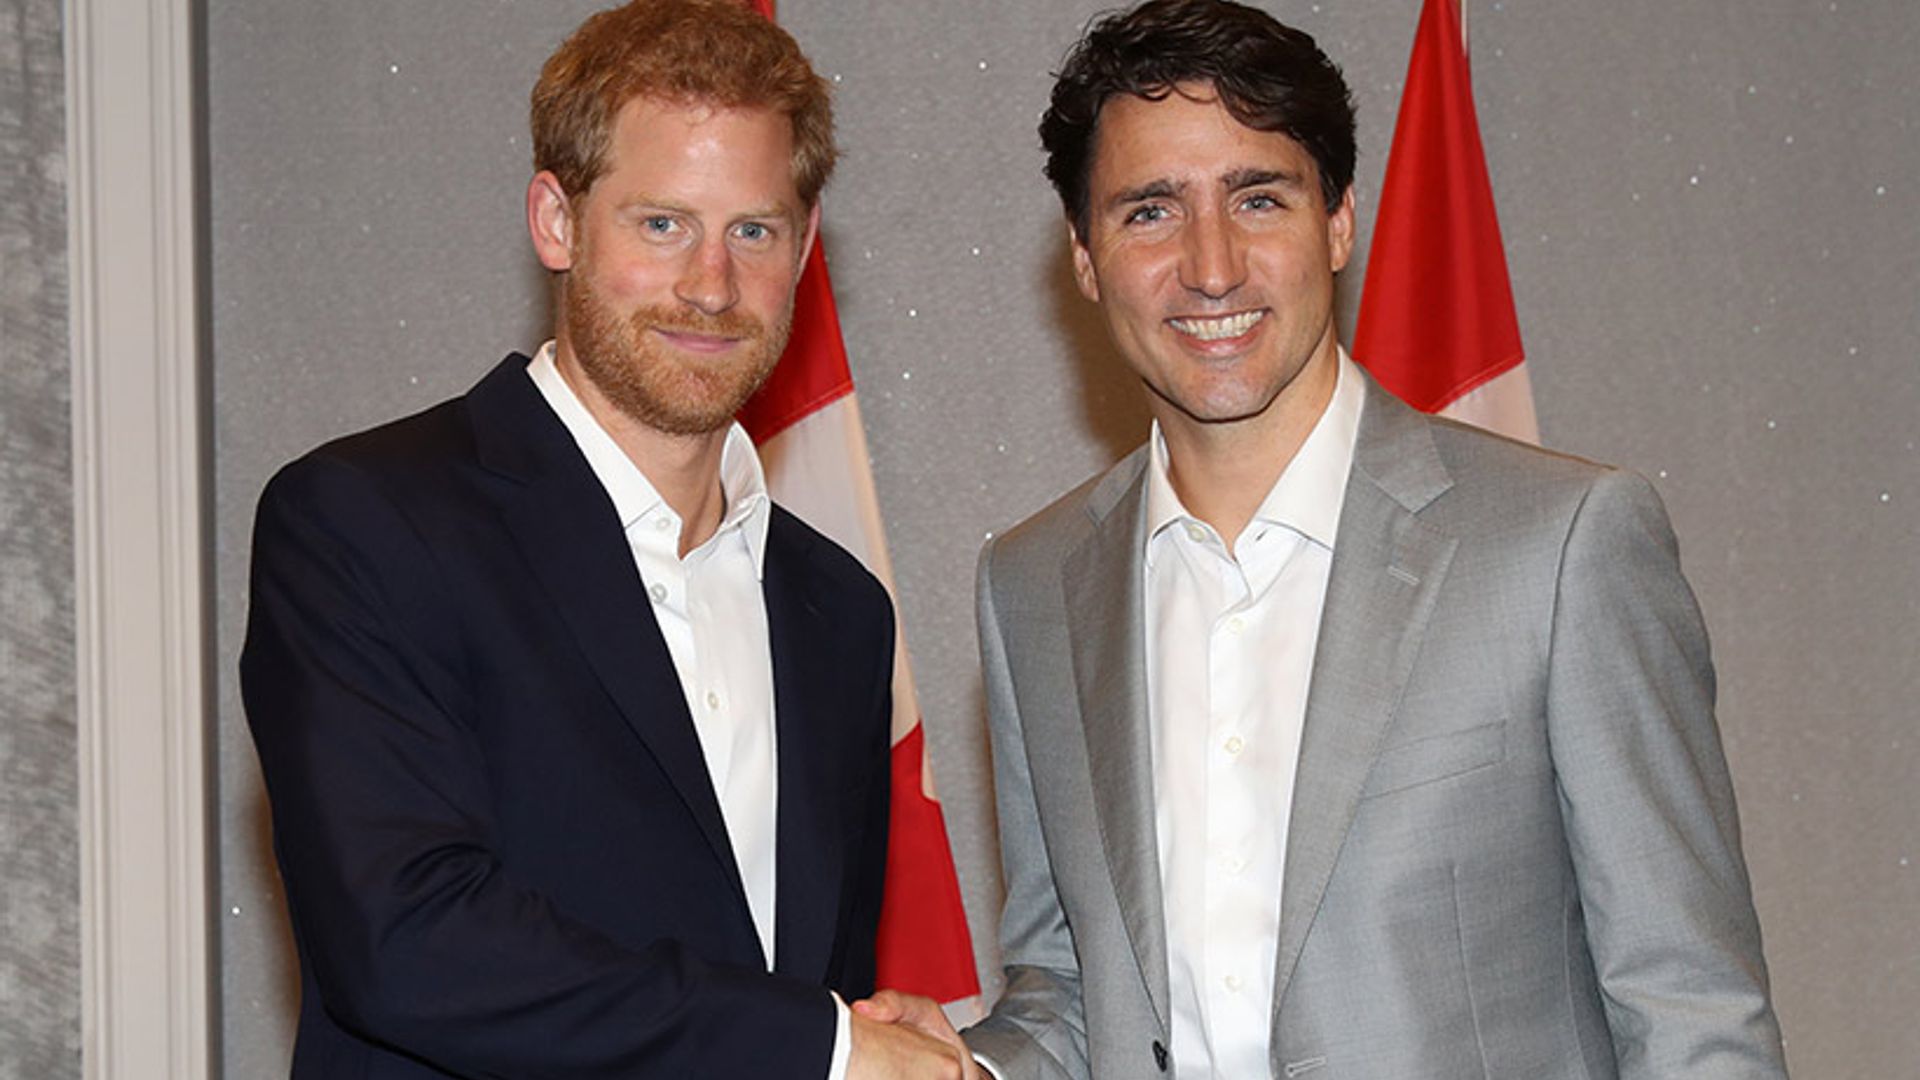 Justin Trudeau not attending royal wedding